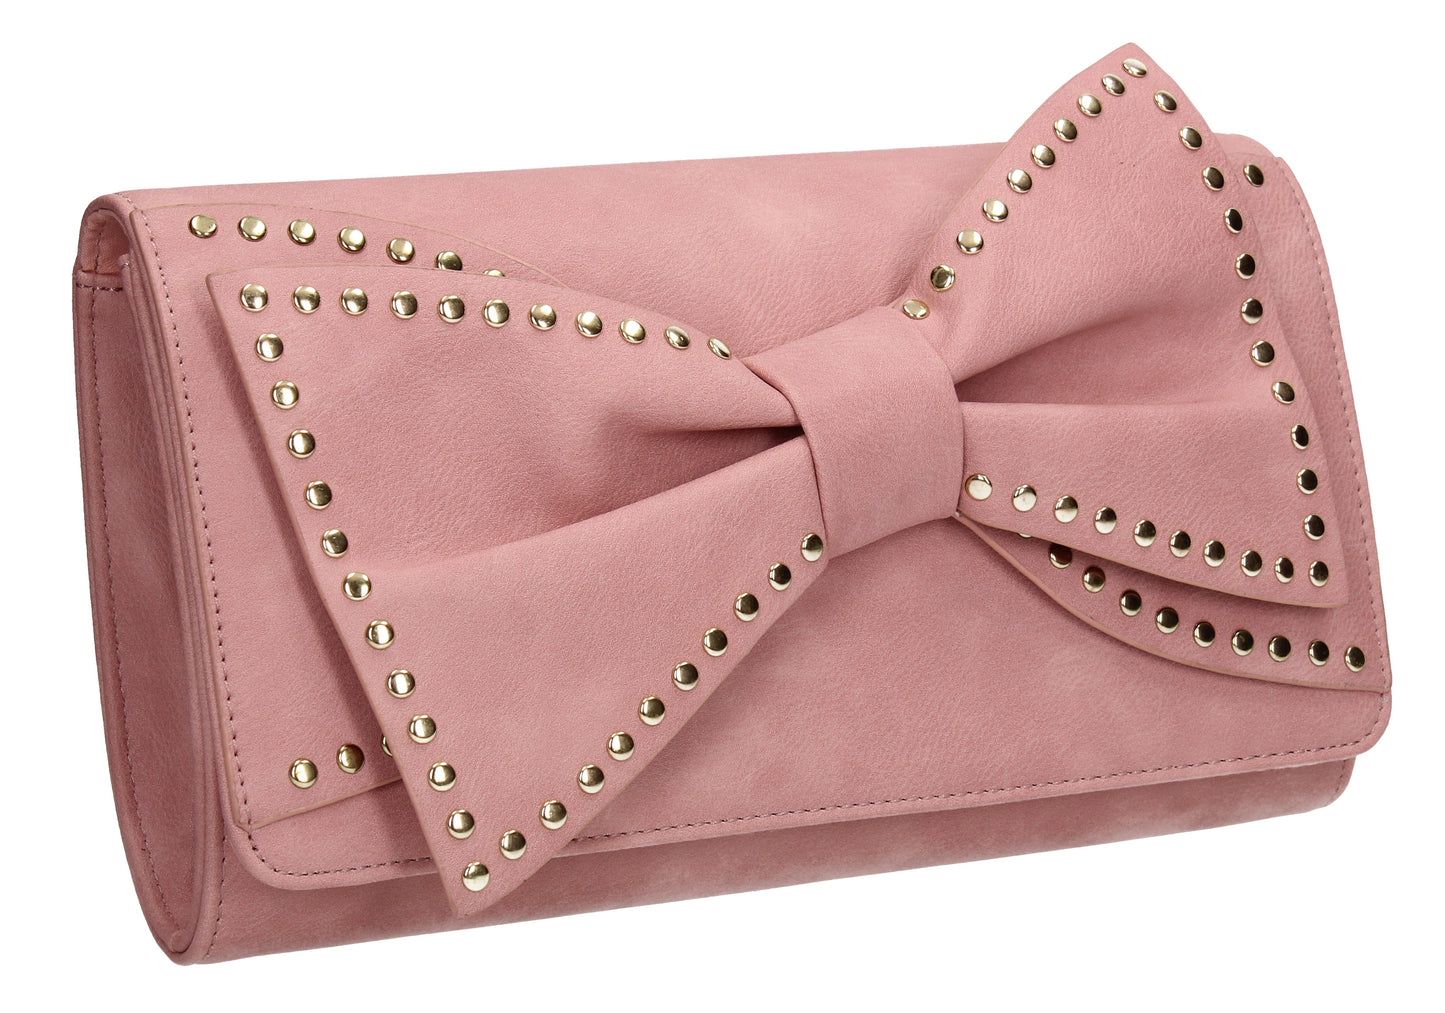 SWANKYSWANS Kelly Bow Clutch Bag Flesh Pink Cute Cheap Clutch Bag For Weddings School and Work